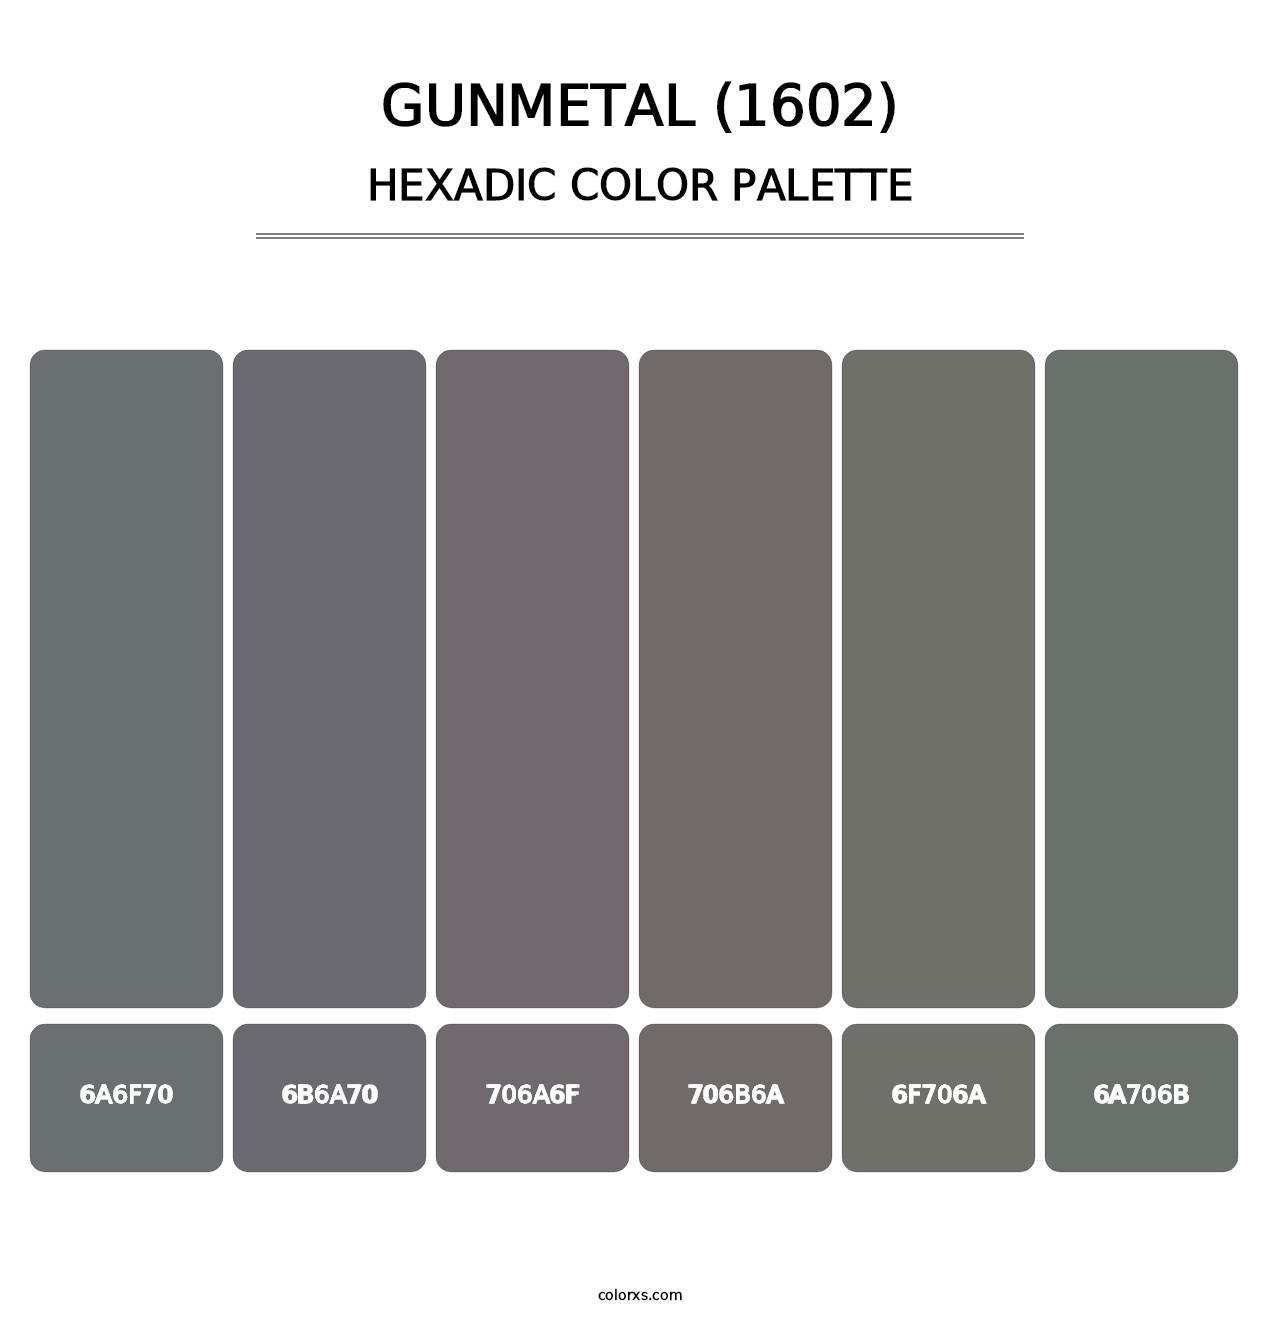 Gunmetal (1602) - Hexadic Color Palette